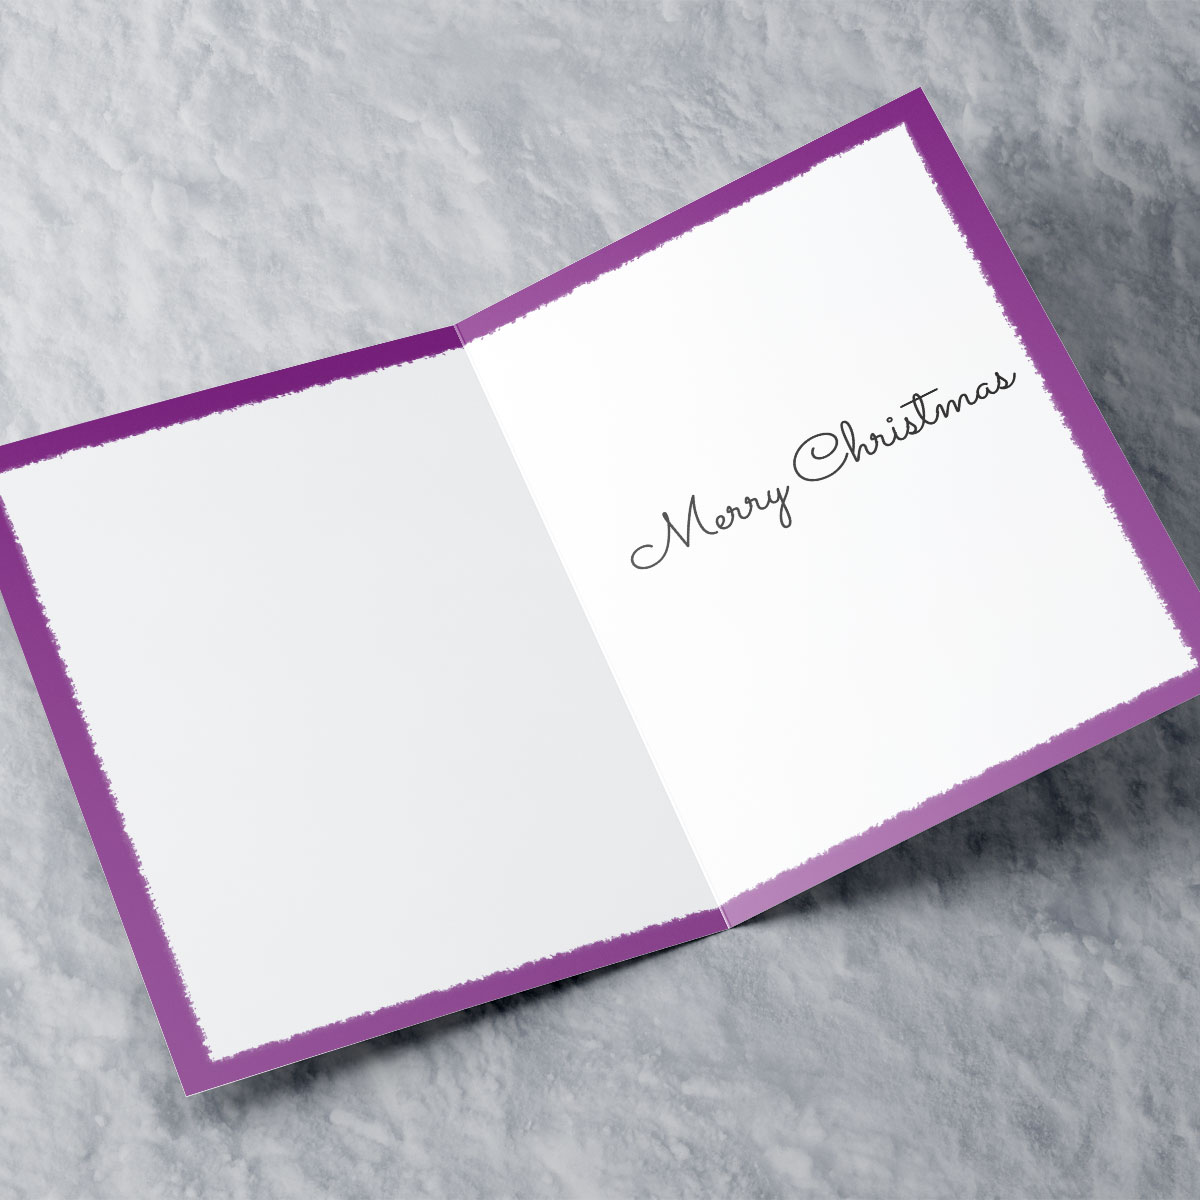 Personalised Christmas Card - Meowy Christmas